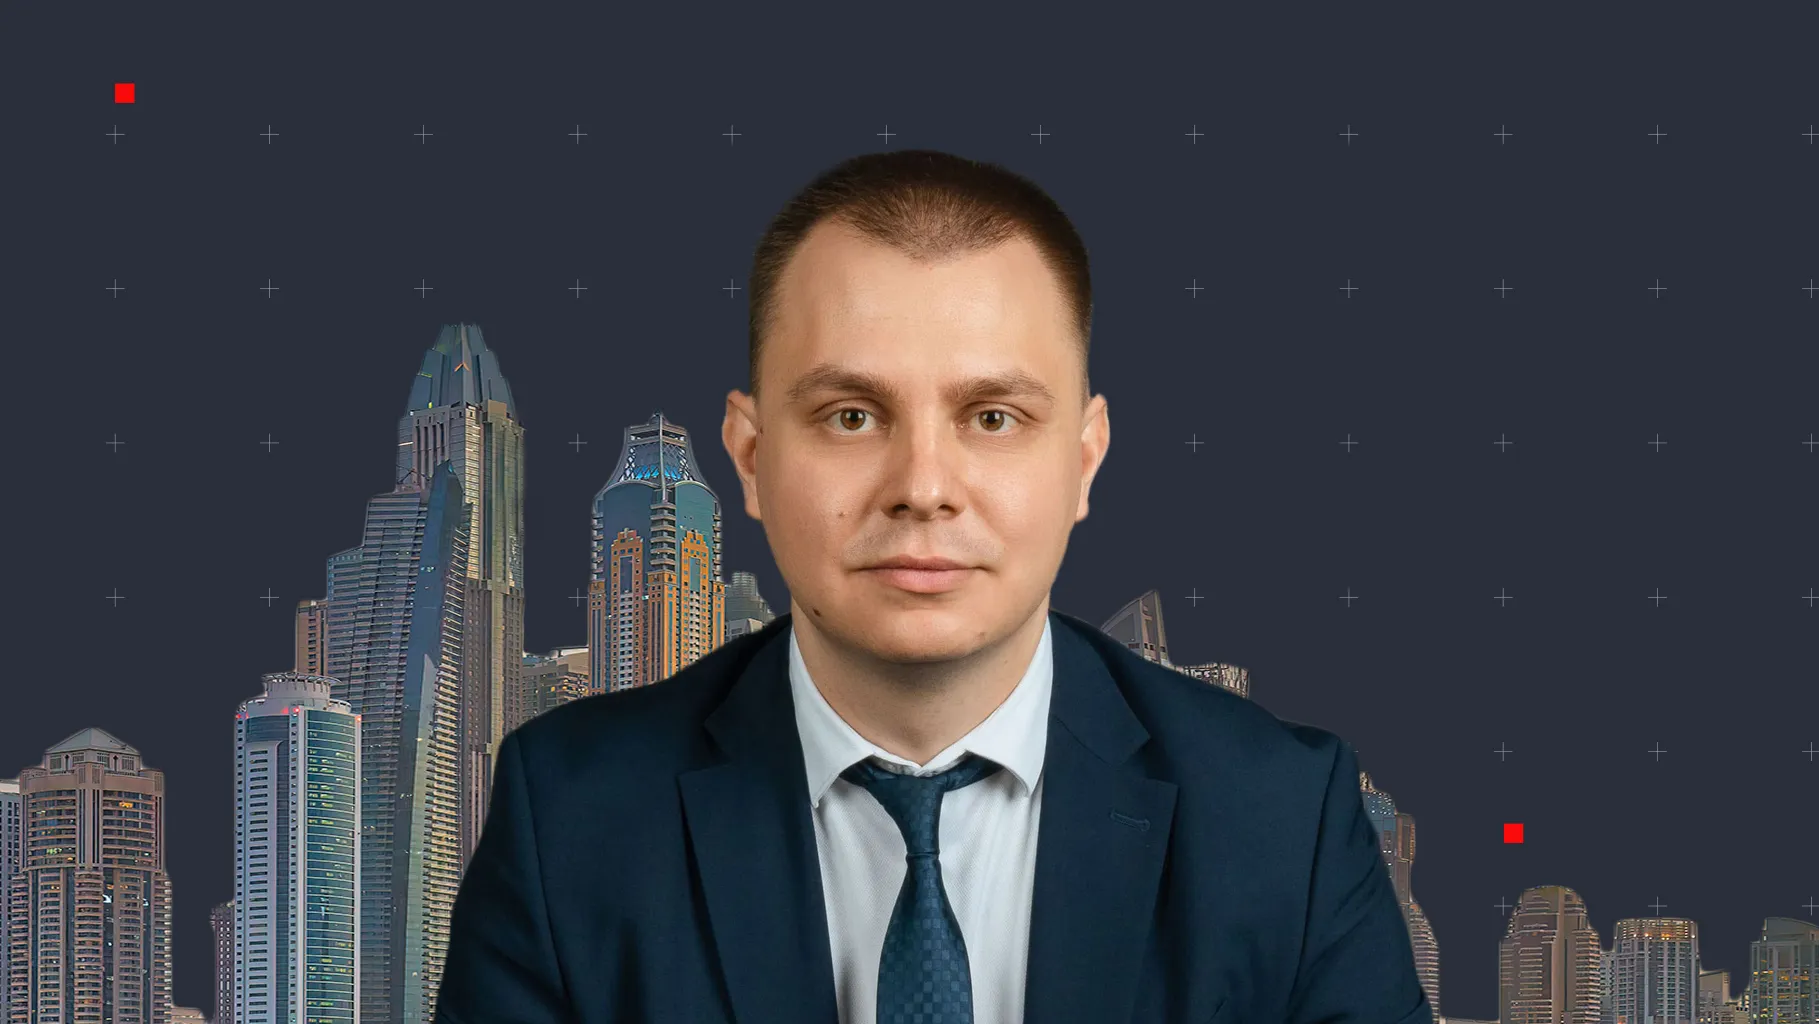 Как украинский экс-прокурор разбогател на мигрантах в Москве и перебрался в Дубаи
